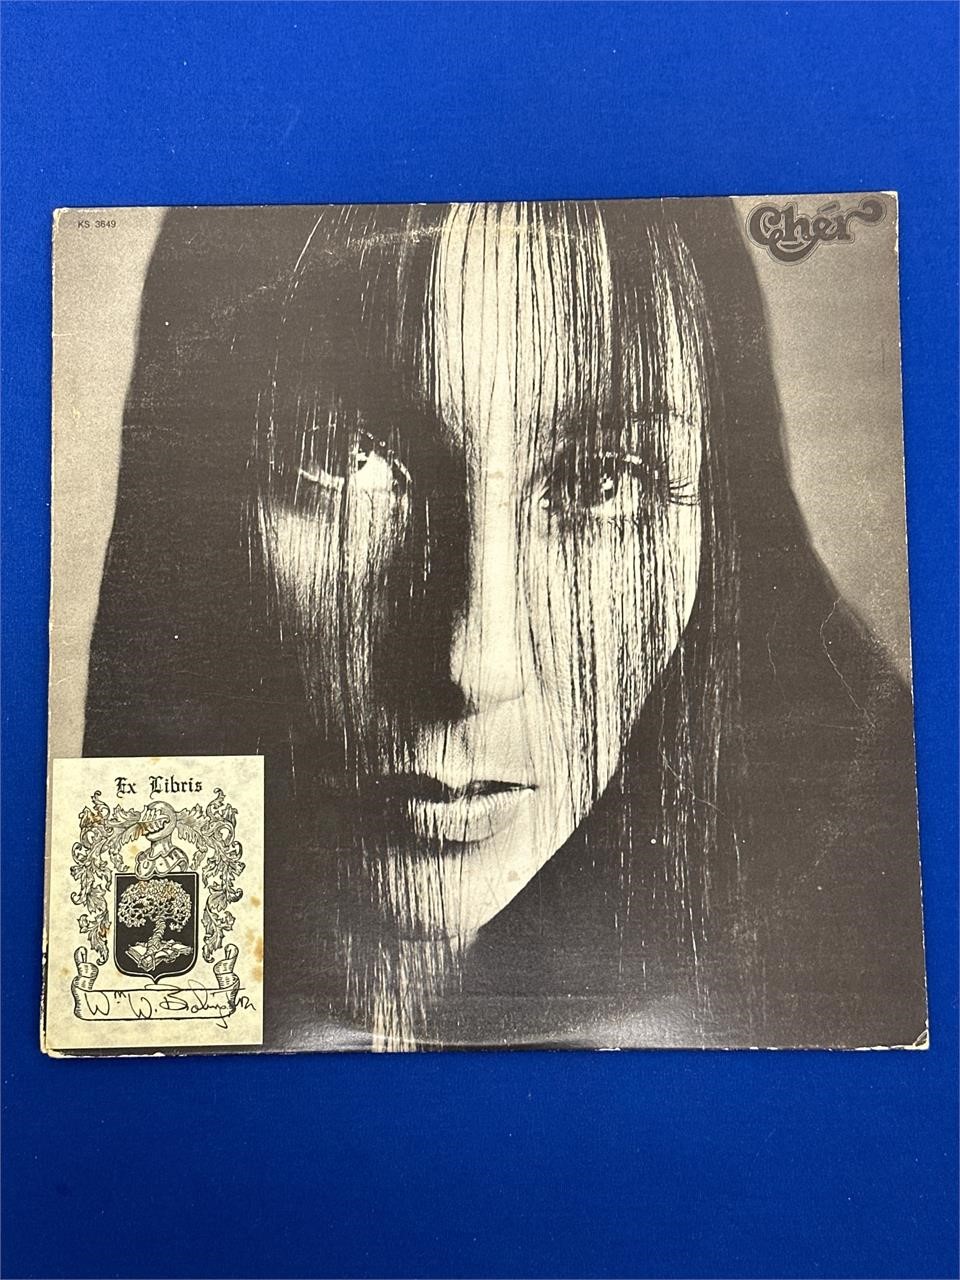 Cher Vinyl 33 Album